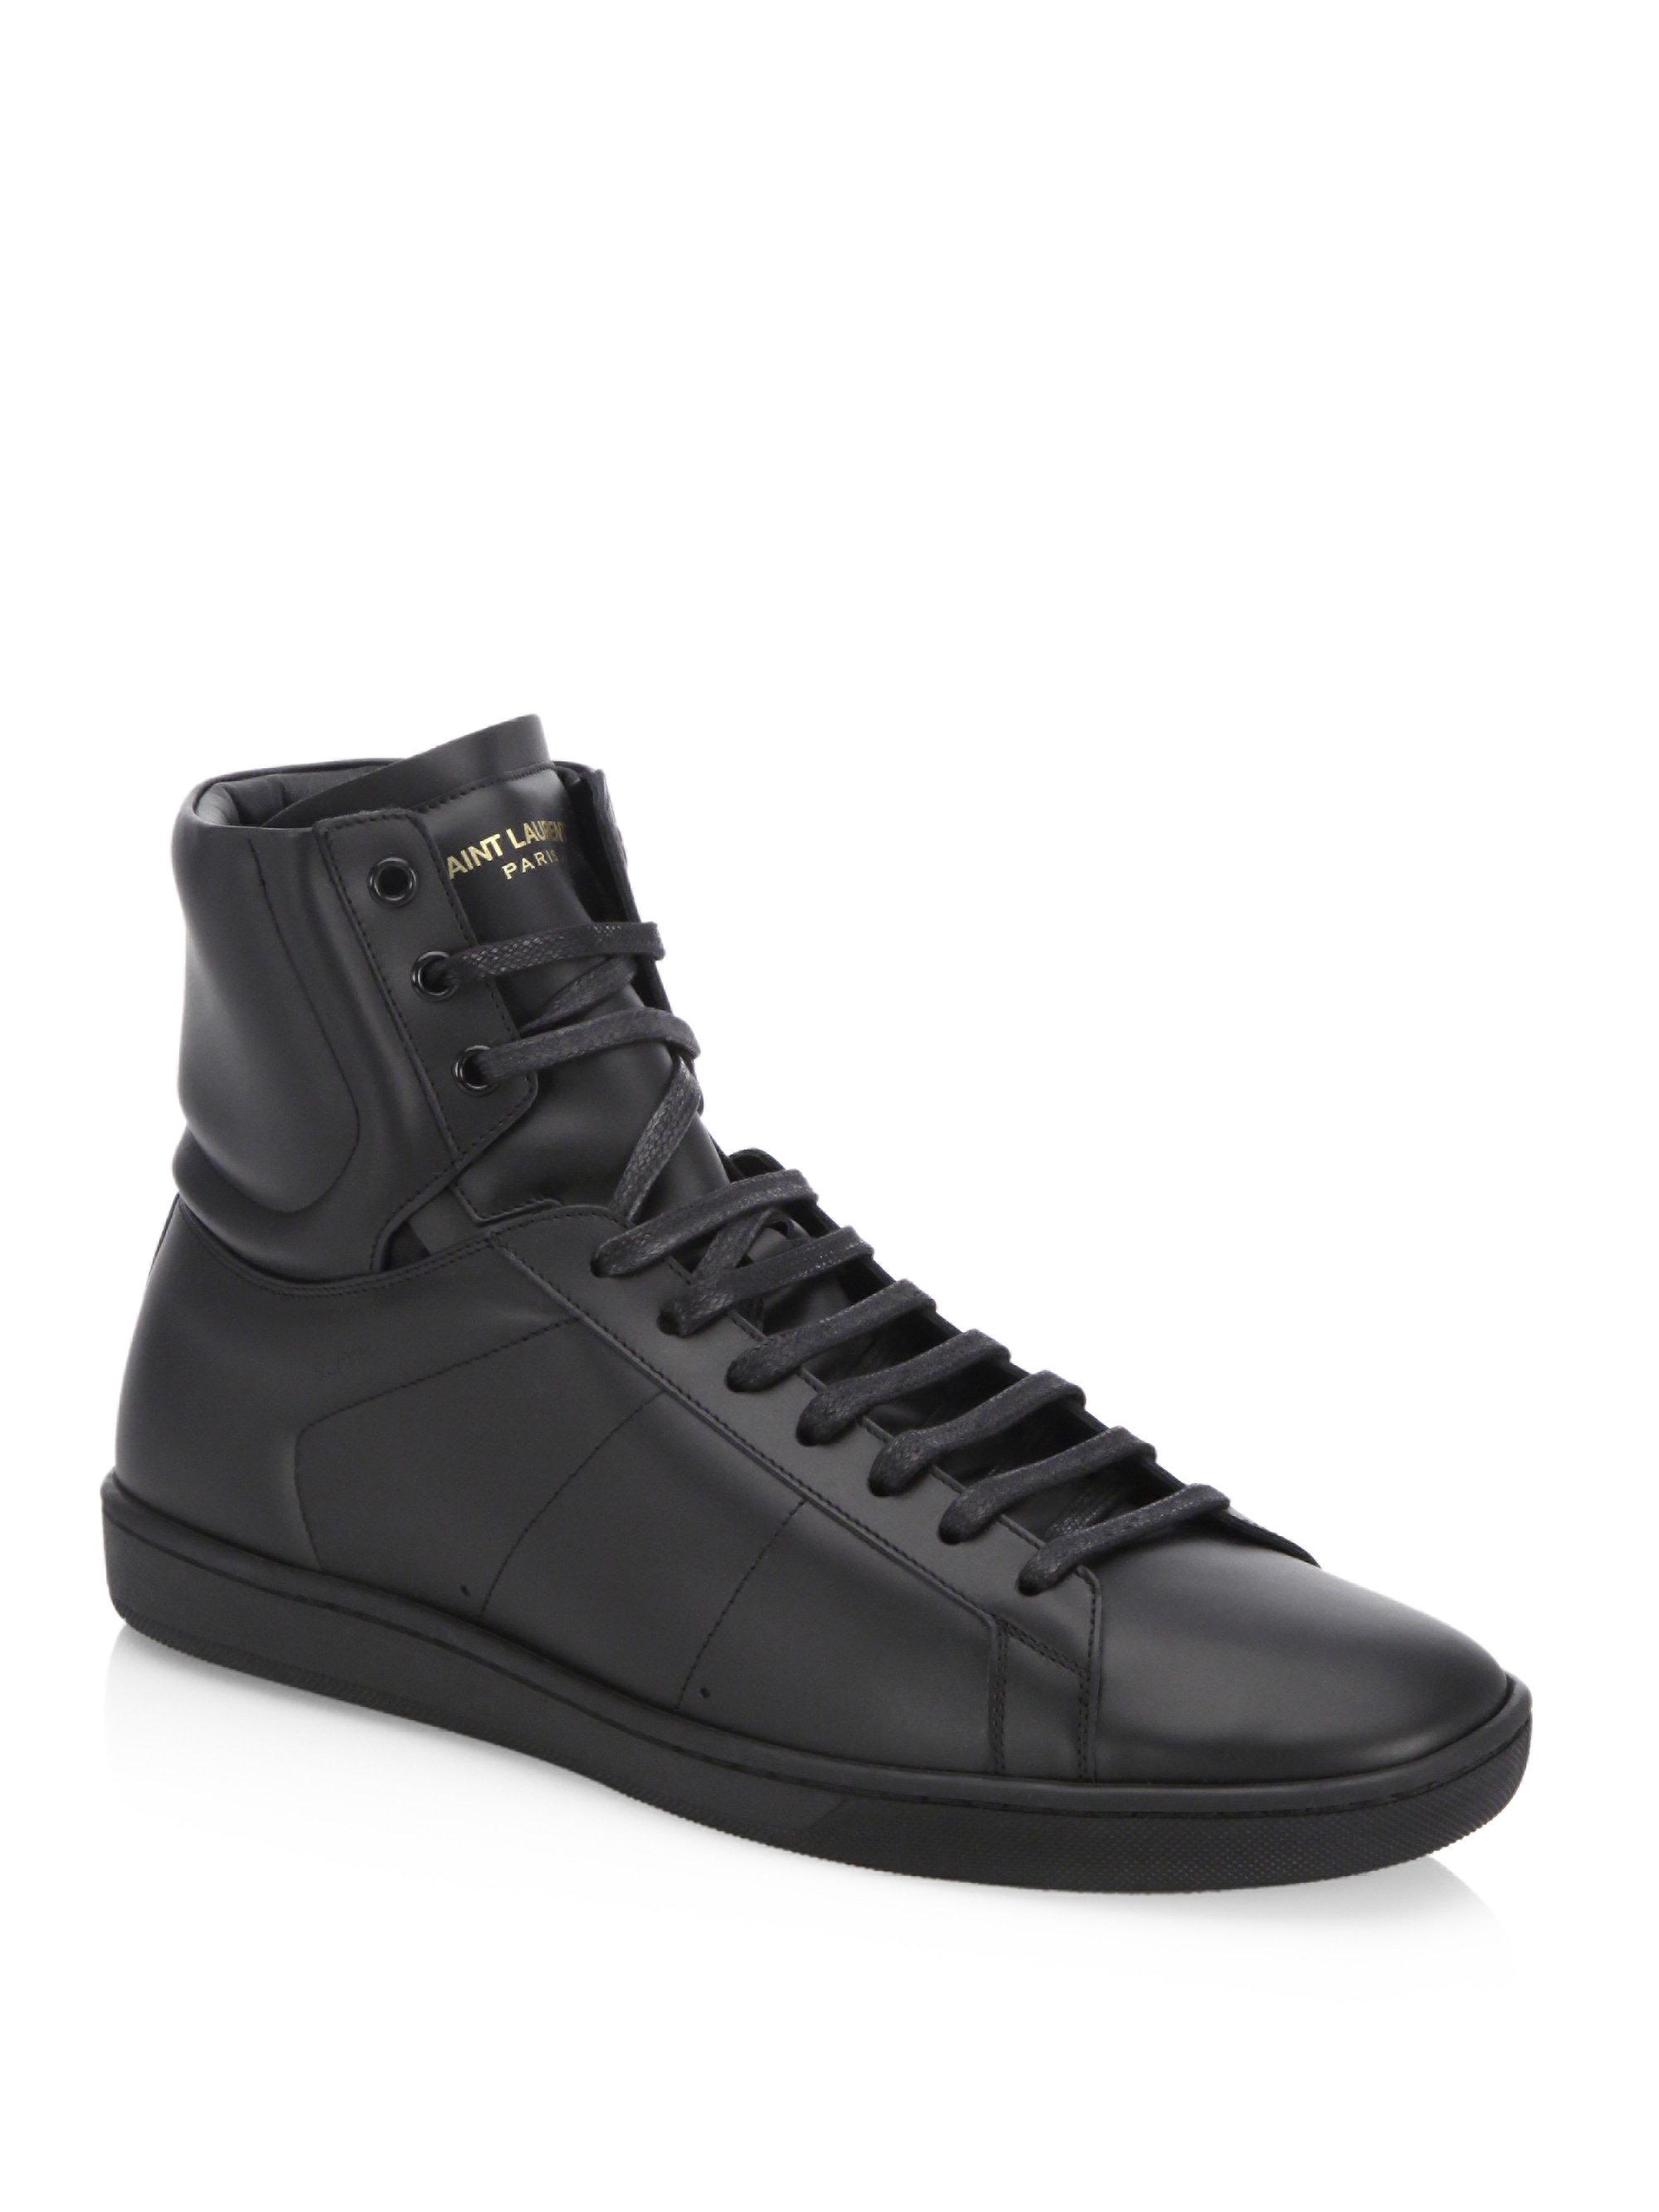 Saint Laurent Sl/10h Men's Signature Court Classic Leather High-top Sneakers  in Black for Men - Lyst